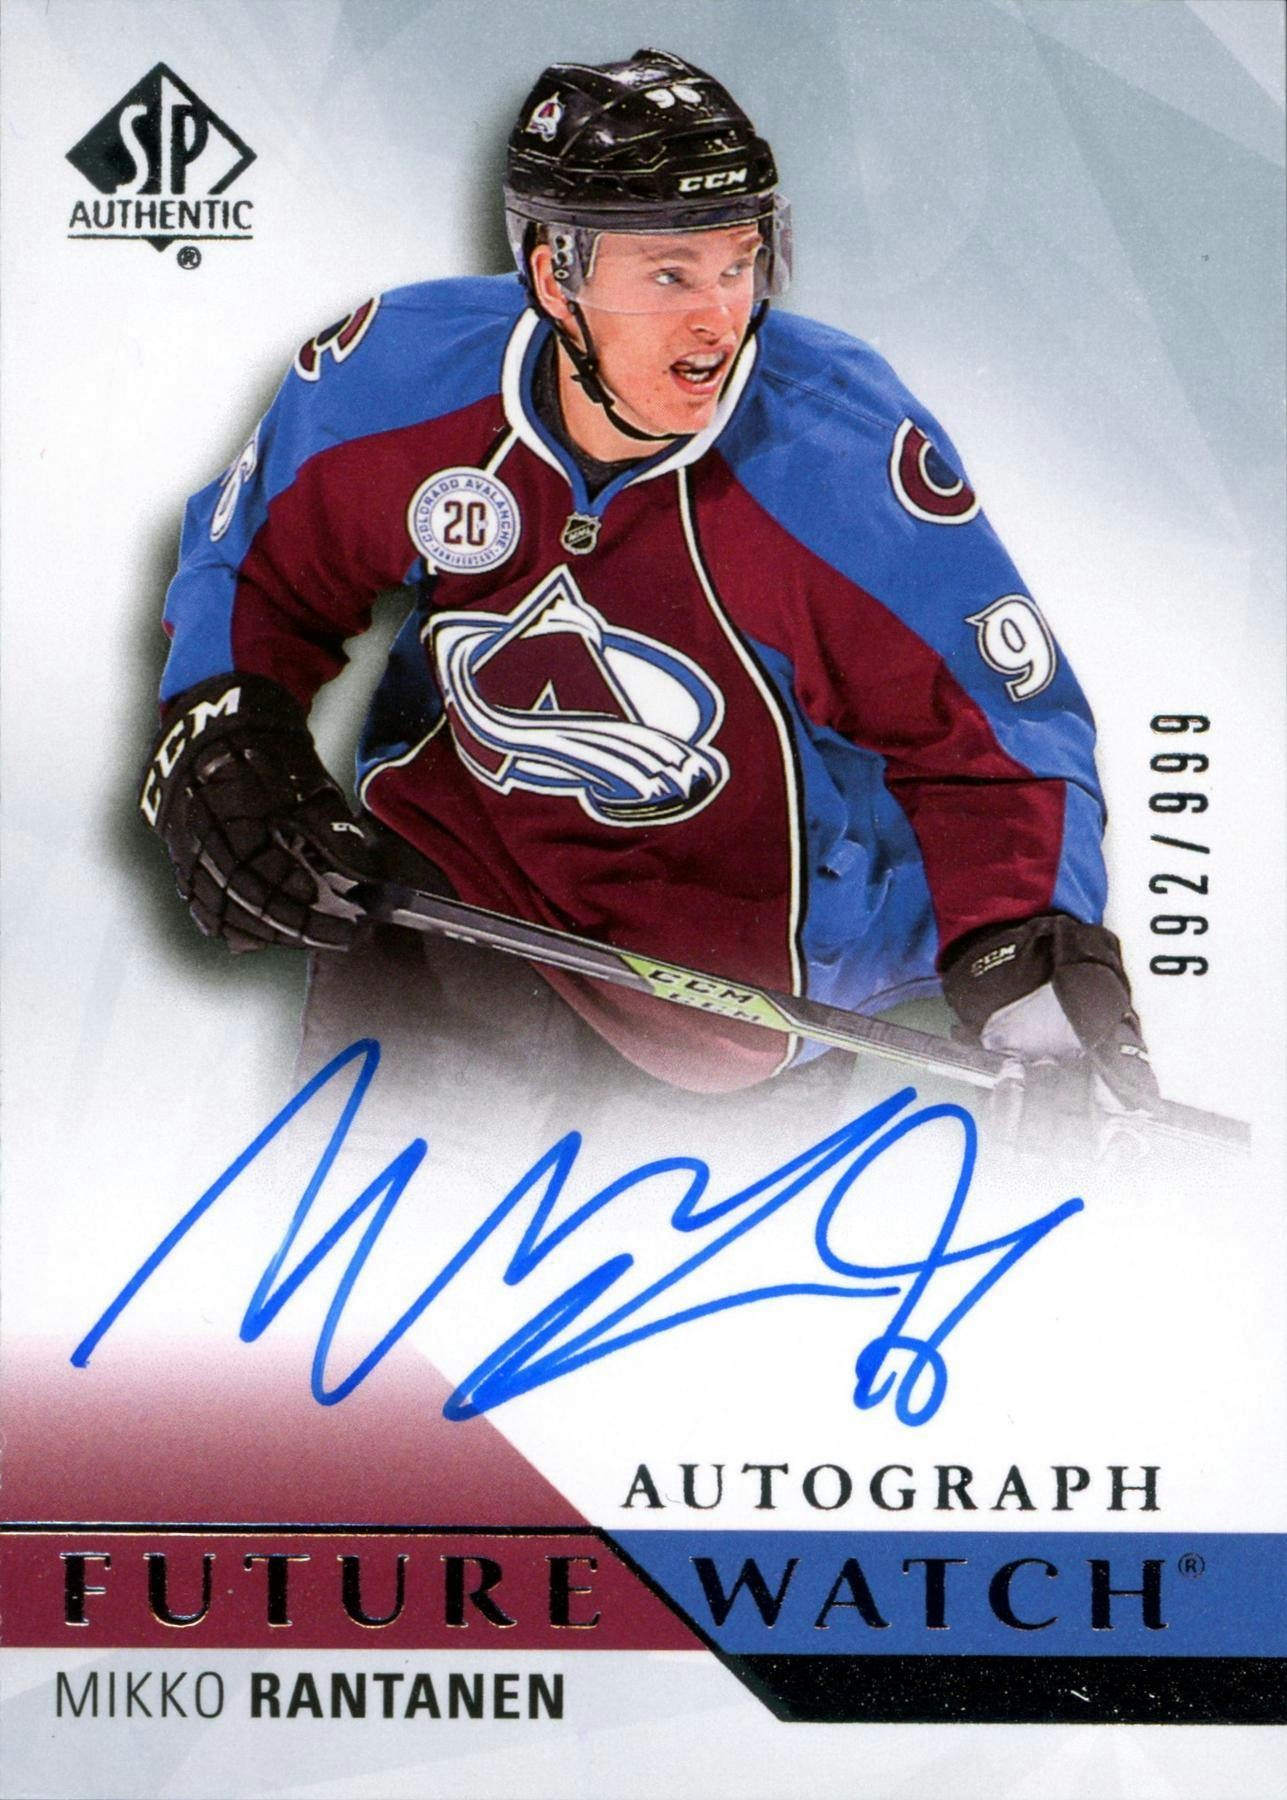 Connor Mcdavid Ice Hockey Player Signed Autograph Photo 